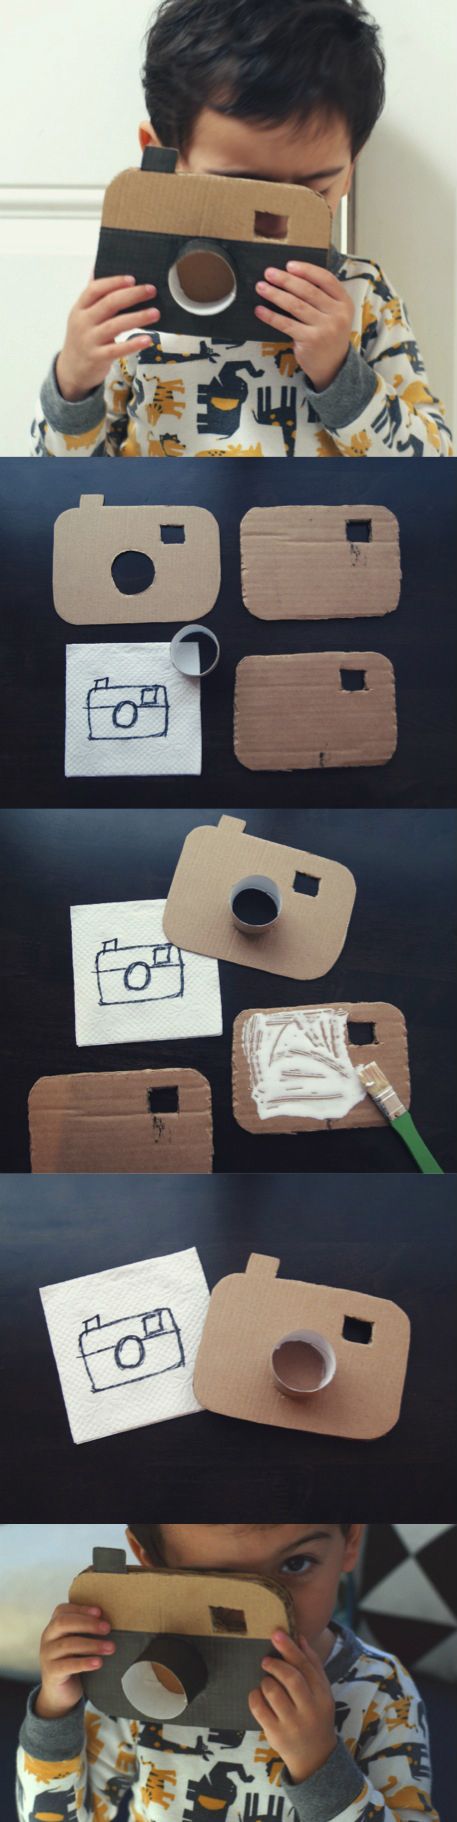 DIY Cardboard Camera Craft Activity For Kids Cardboard Toy Crafts